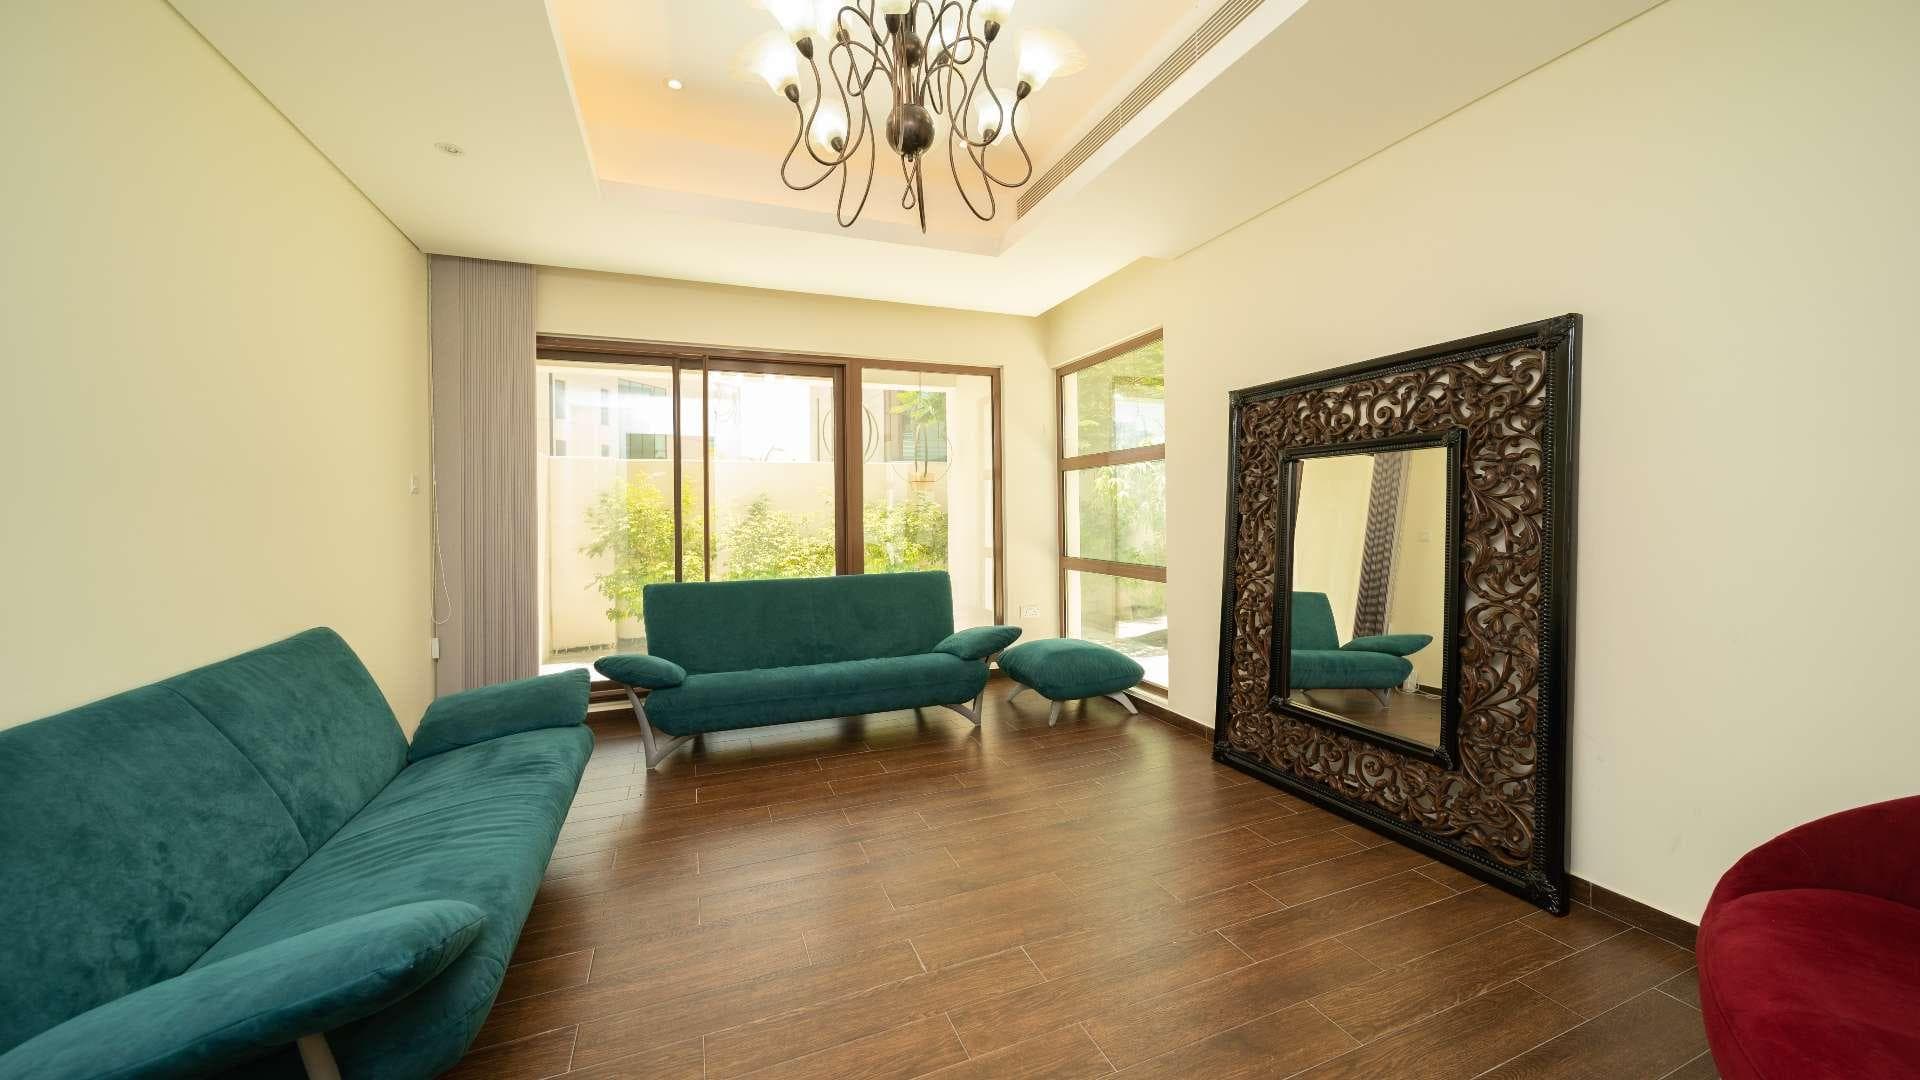 6 Bedroom Villa For Rent Grand View Lp12987 212383ed16ebb400.jpg